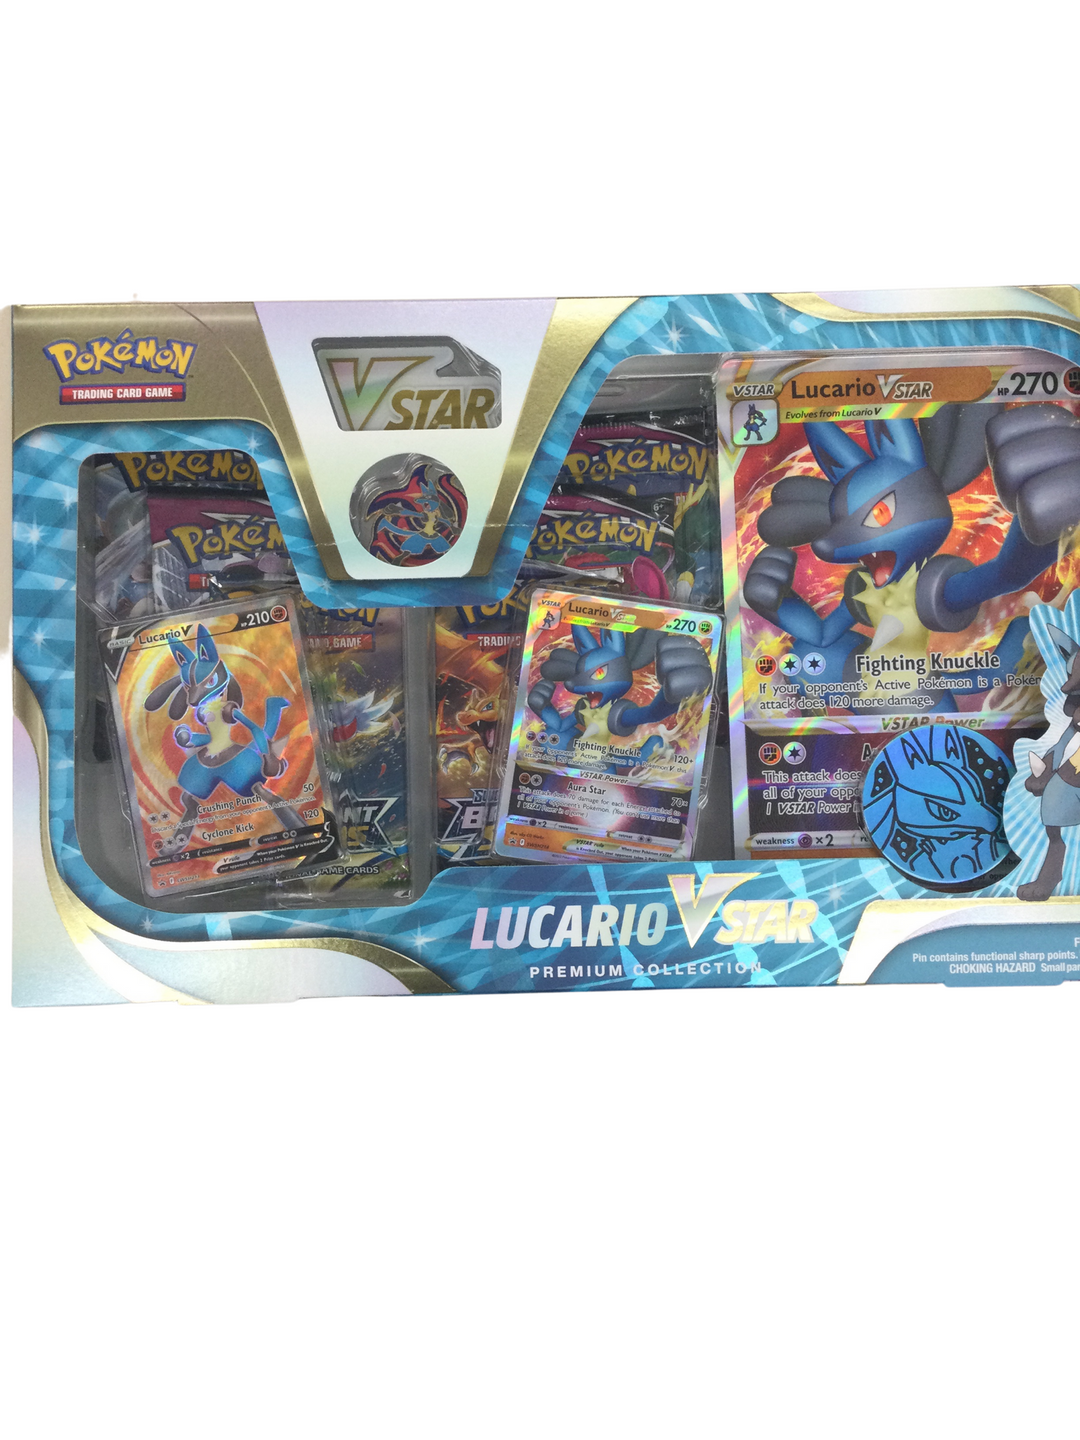 Pokémon Lucario Vstar Premium